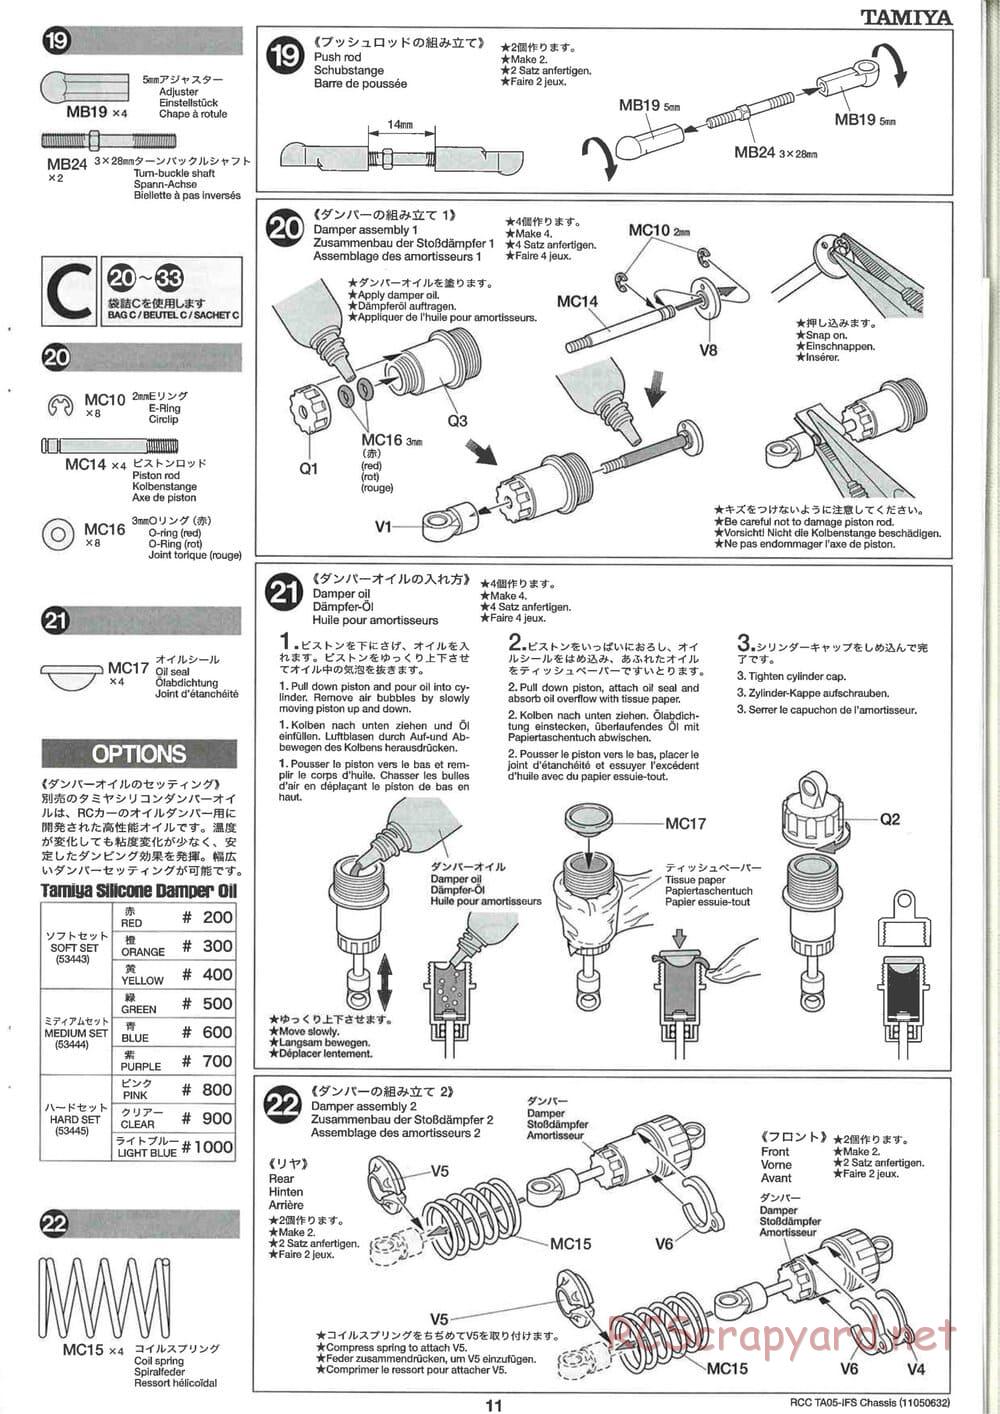 Tamiya - TA05-IFS Chassis - Manual - Page 11